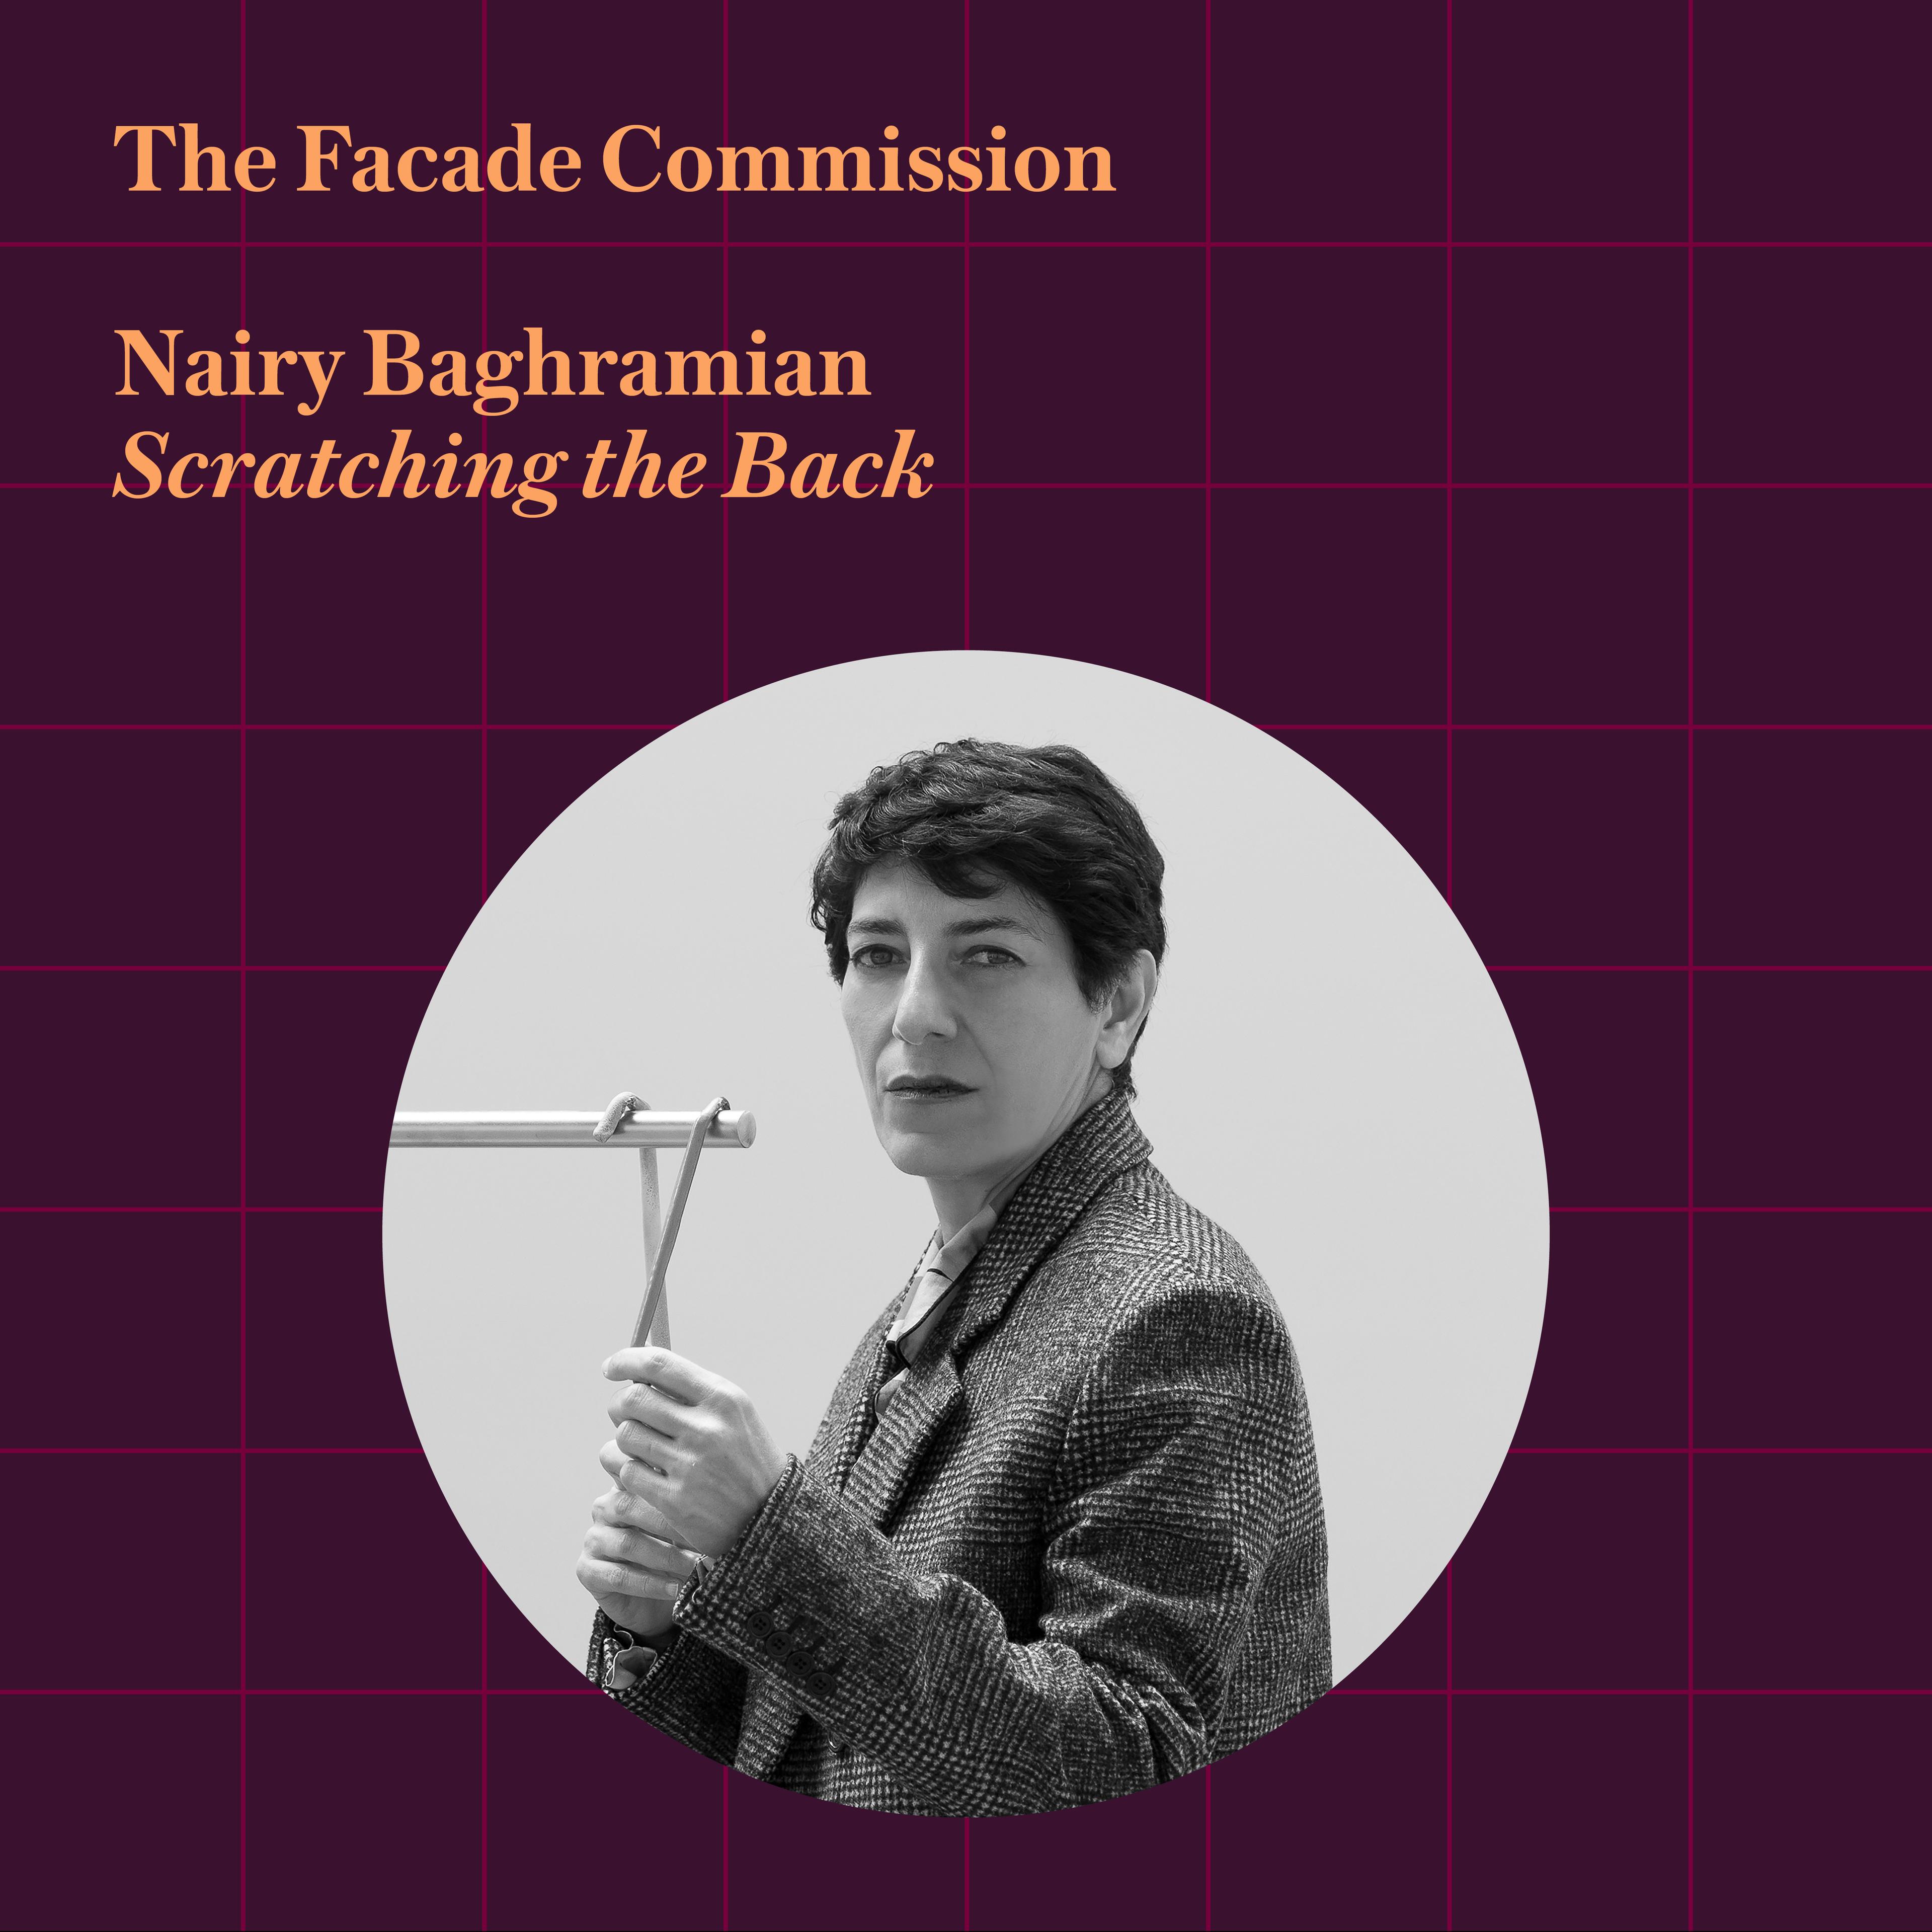 Nairy Baghramian headshot